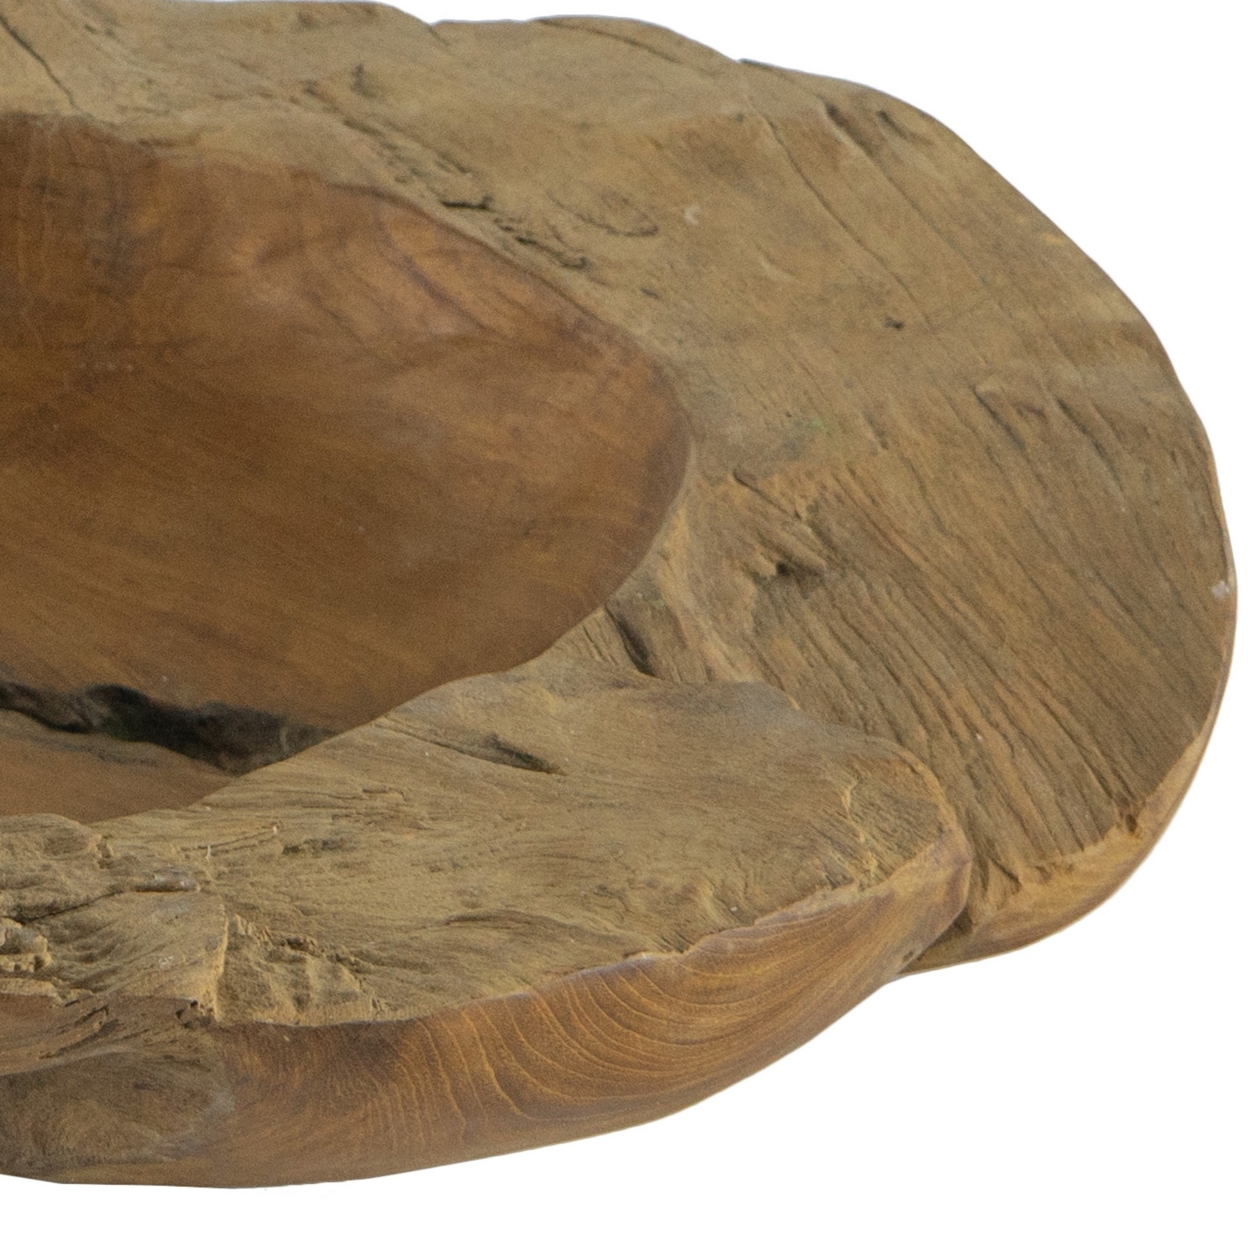 Set Of 2 Decoratie Teak Wood Table Bowls, Brown, Natural Edge, Brown Finish- Saltoro Sherpi